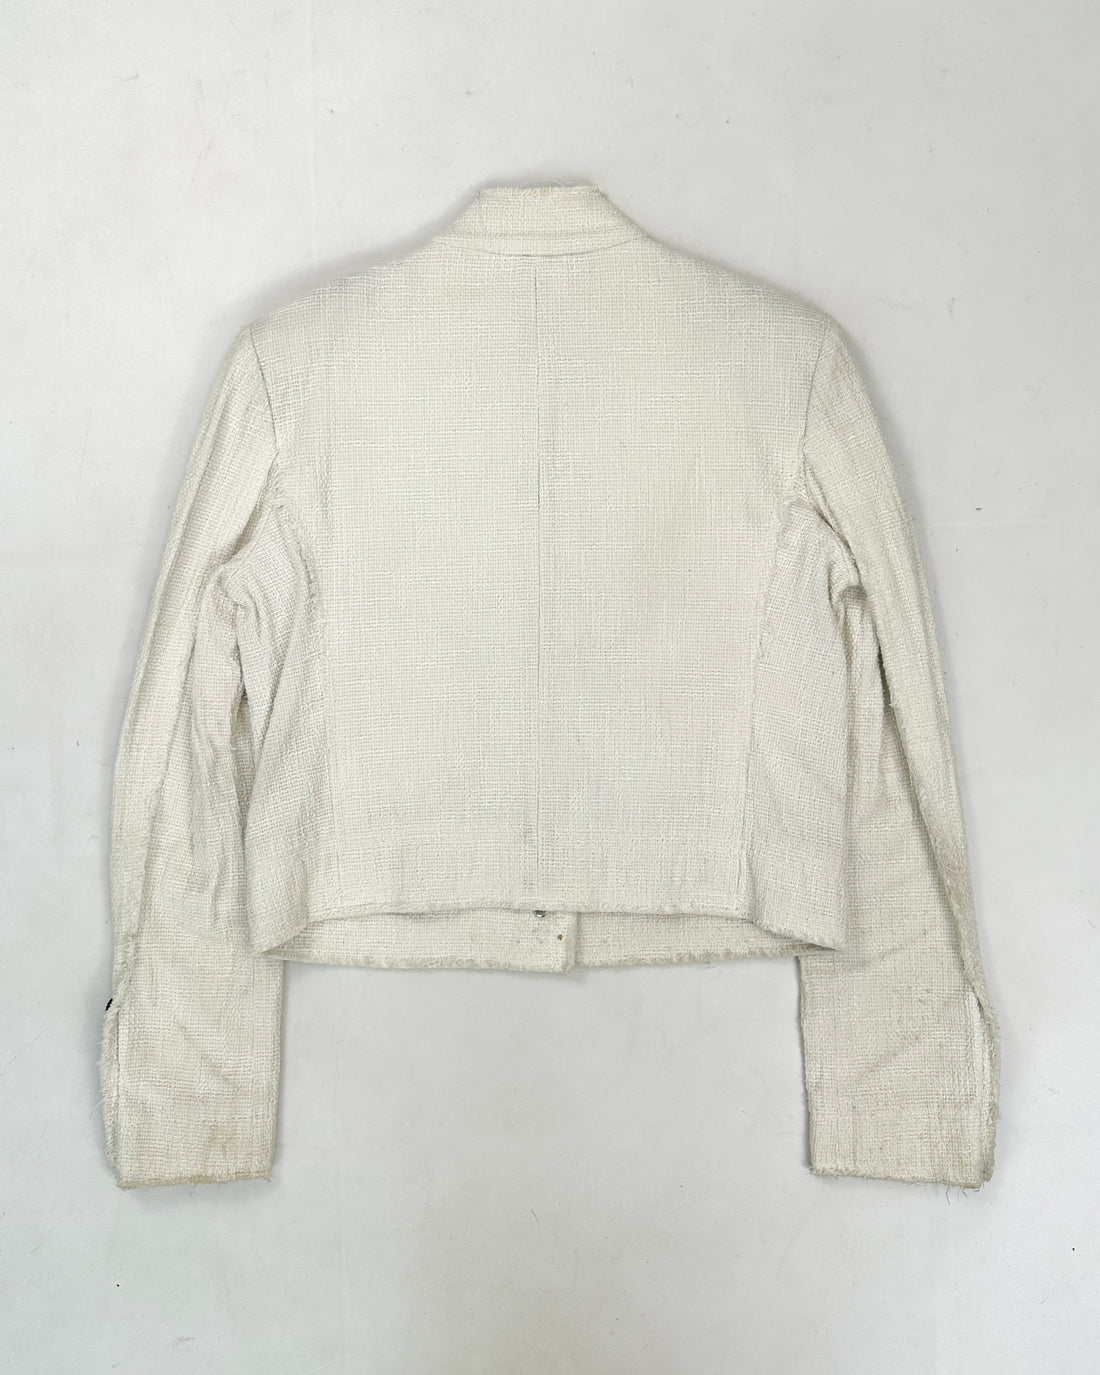 Roberto Cavalli Decorated White Cropped Jacket 2000's